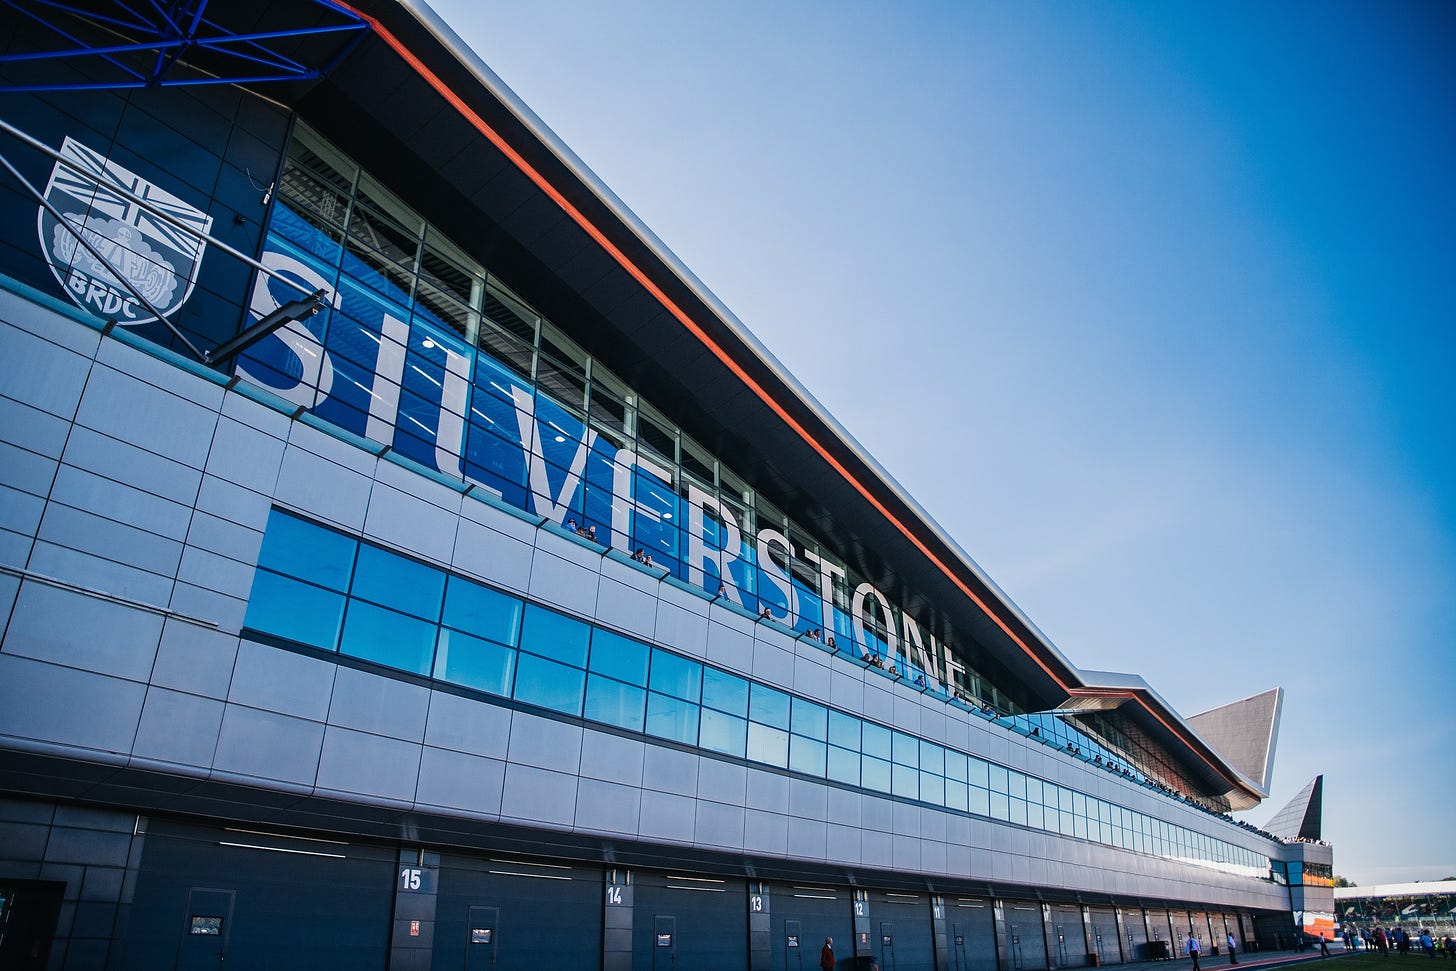 Silverstone Circuits Ltd. wins COOLest Sporting Venue at COOL Venue Awards  | Prestige Events Magazine